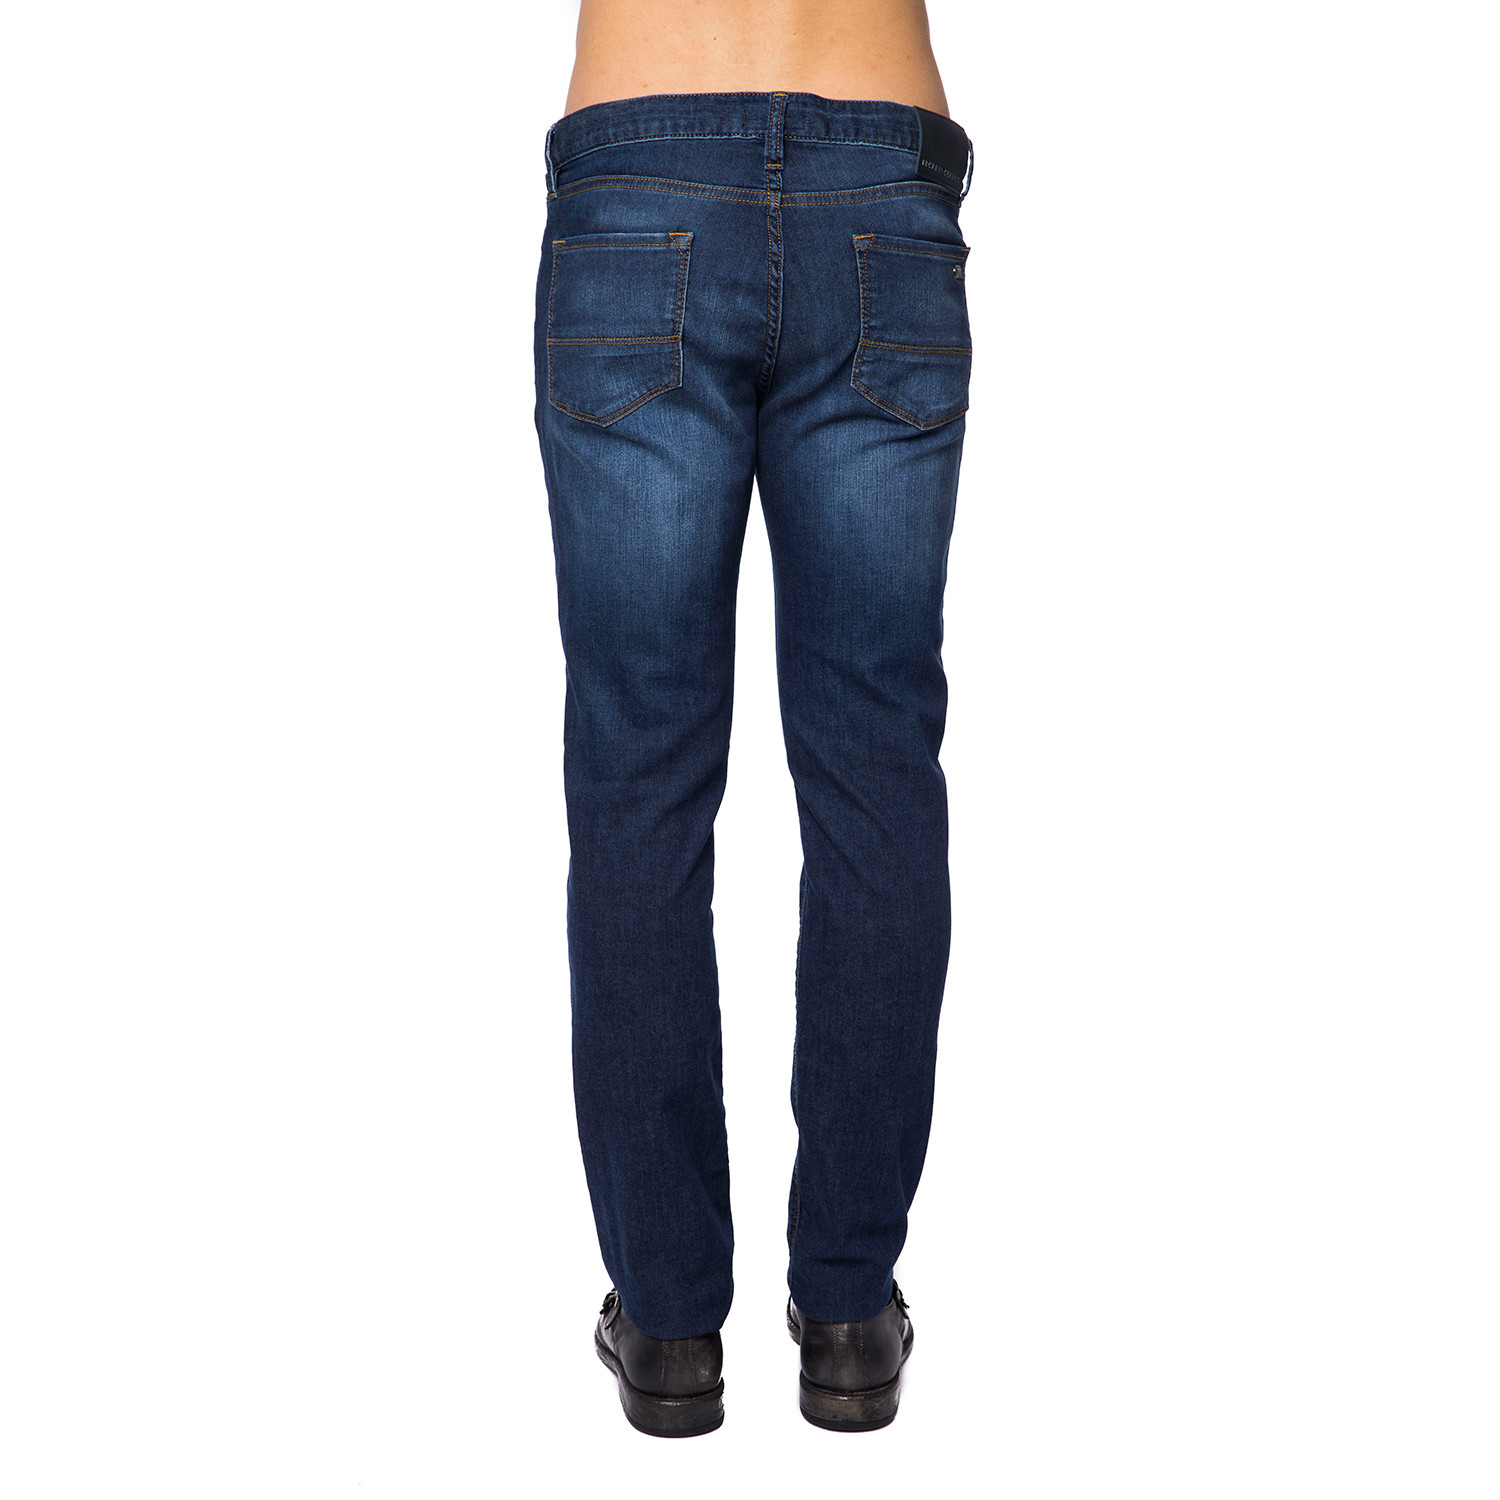 Valencia // 5-Pocket Jeans (29WX32L) - Cerruti 1881 - Touch of Modern